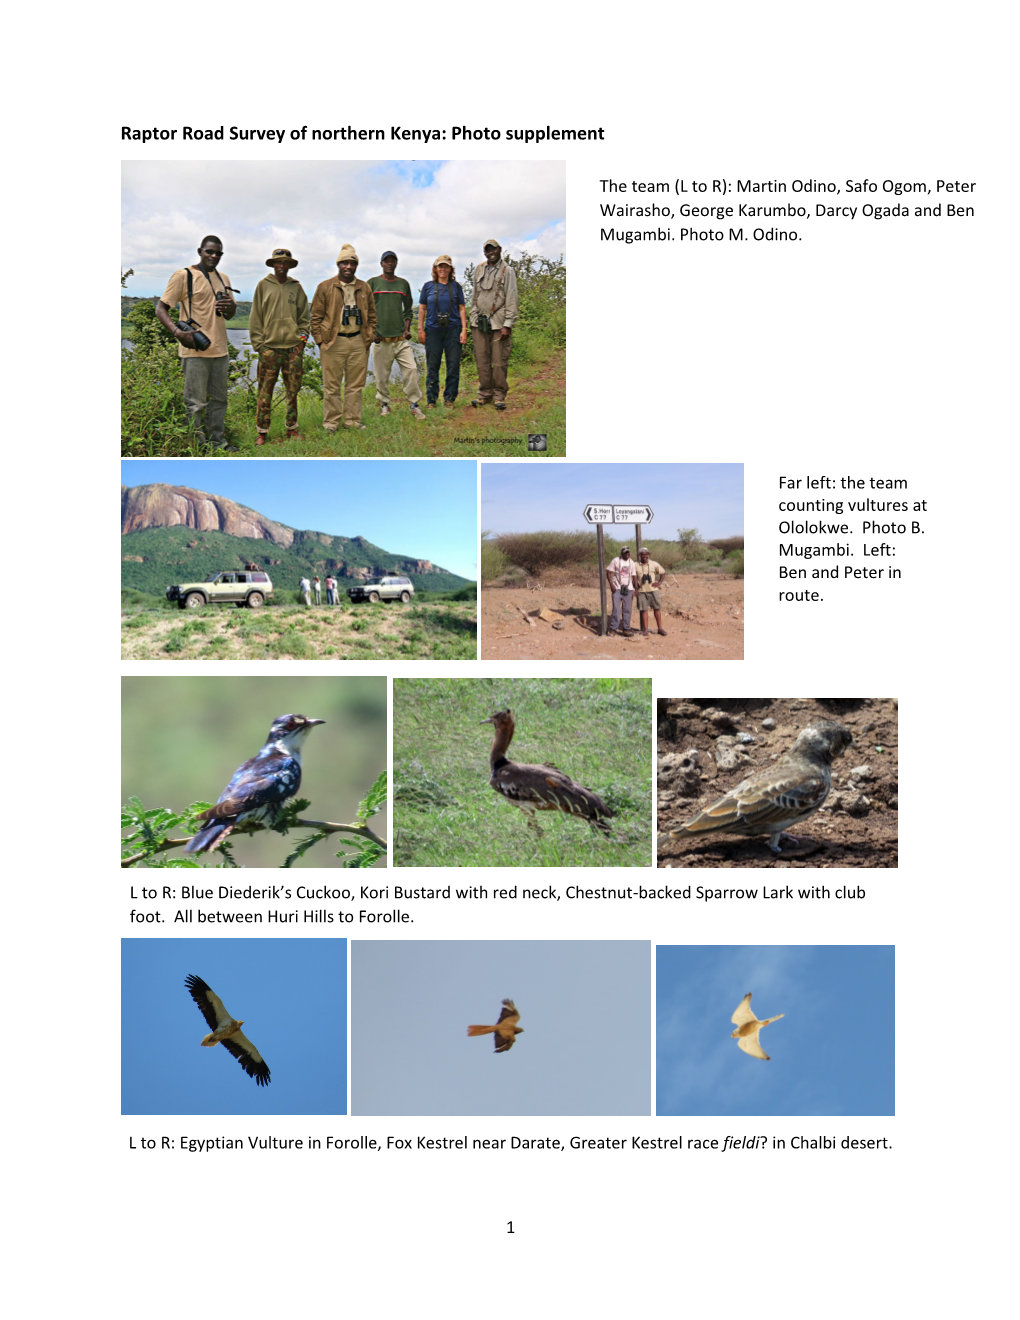 Raptor Road Survey of Northern Kenya: Photo Supplement